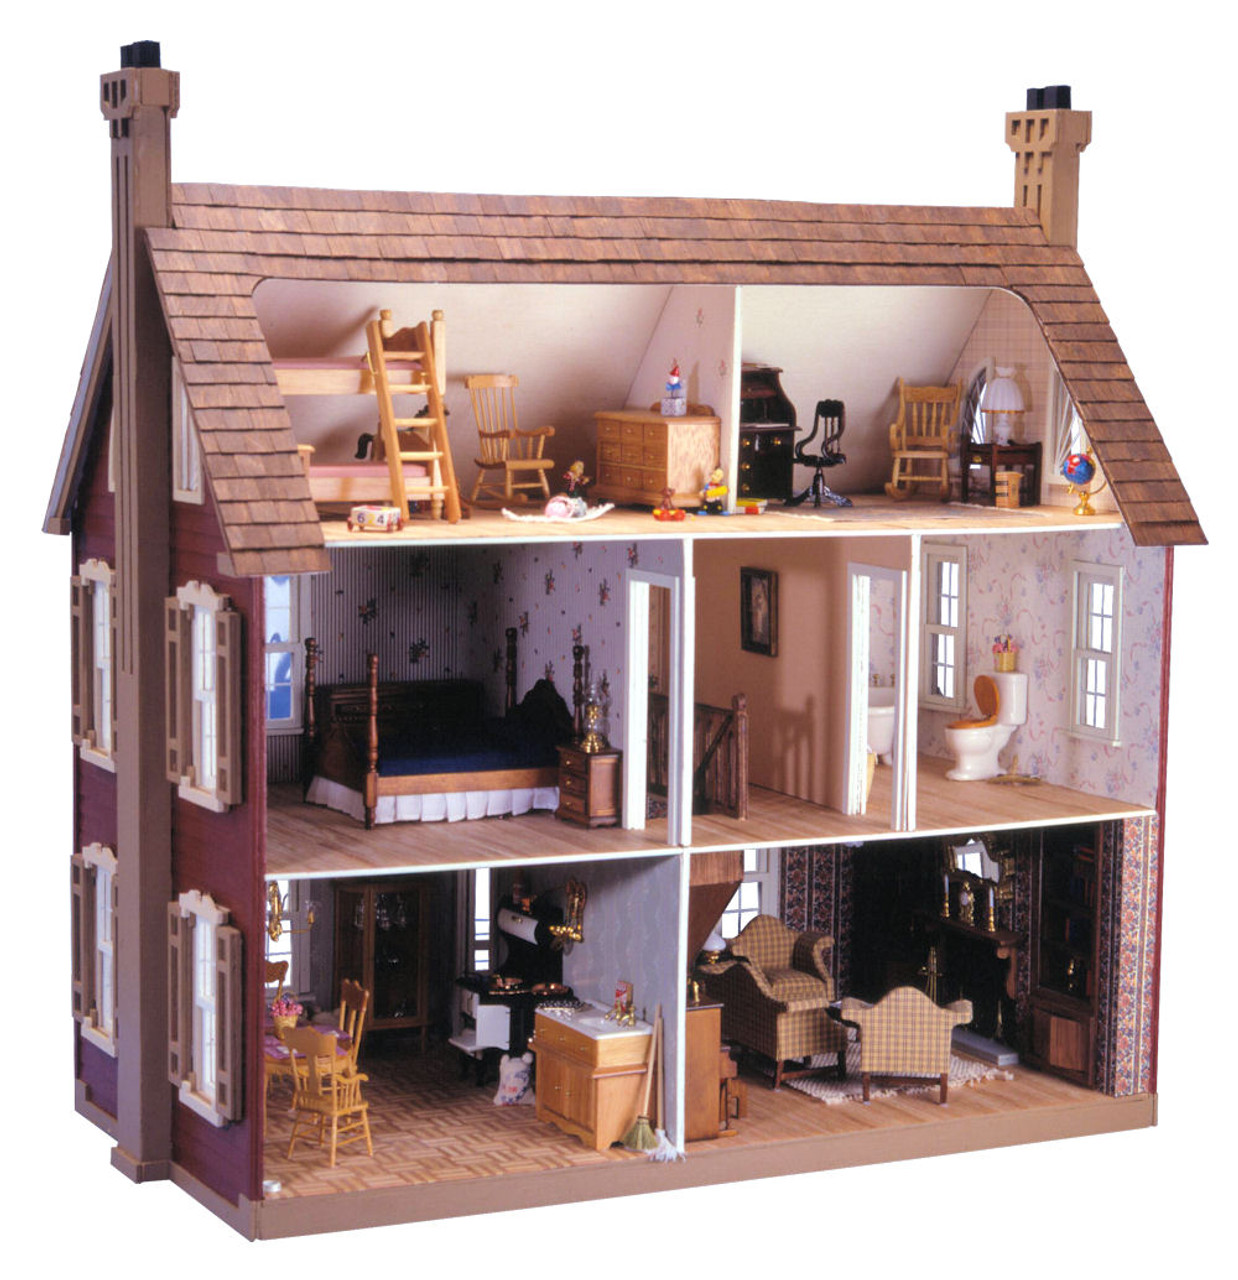 model of doll house